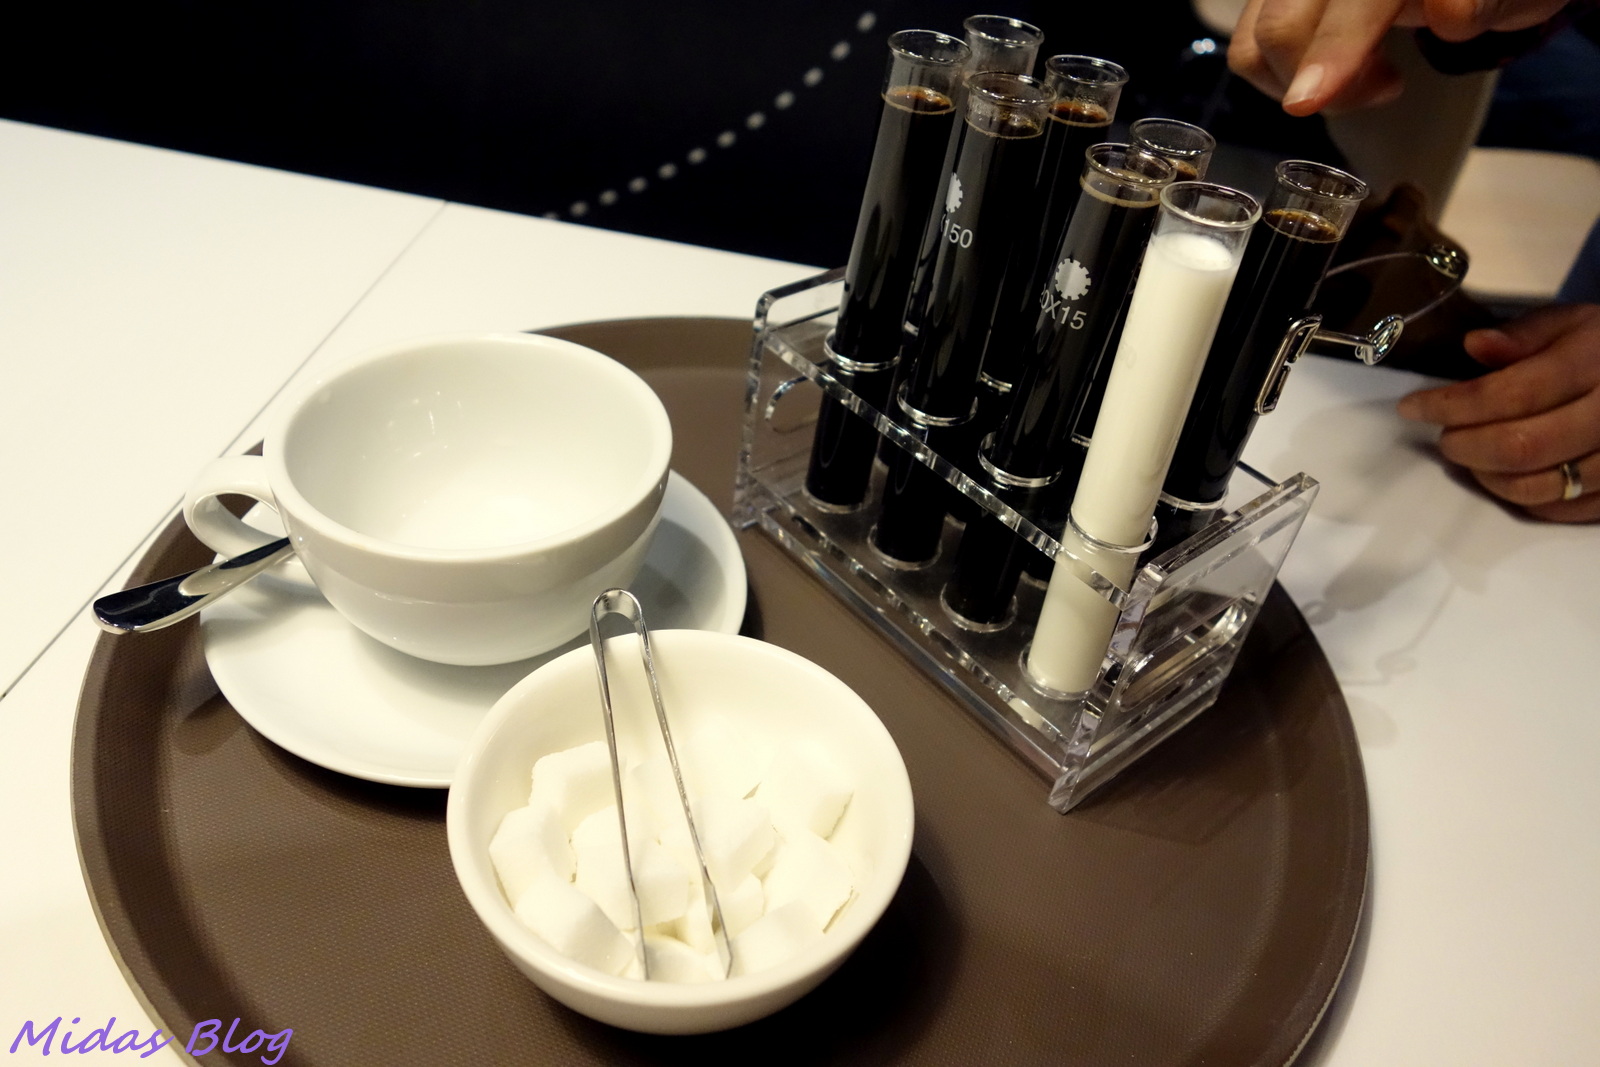 Download Midas Food n Travel Blog: Just Like it! Liquid nitrogen ice cream & Test tube coffee anyone?